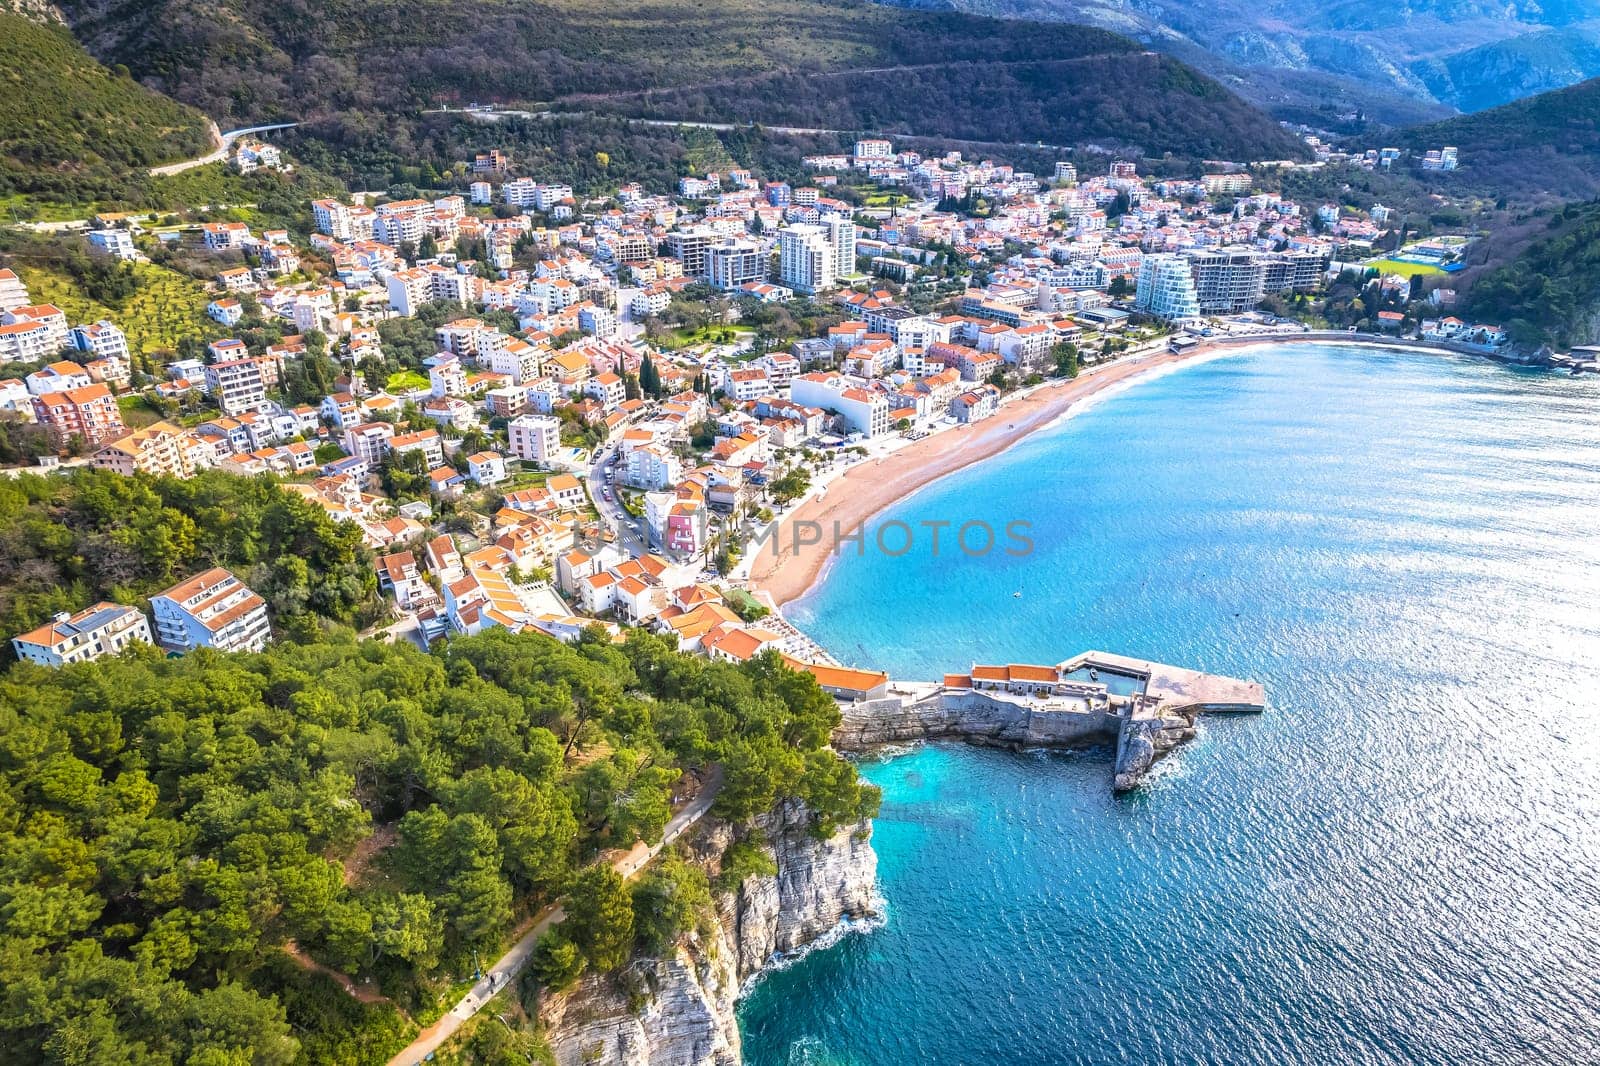 Town of Petrovac beach and coastline aerial view by xbrchx